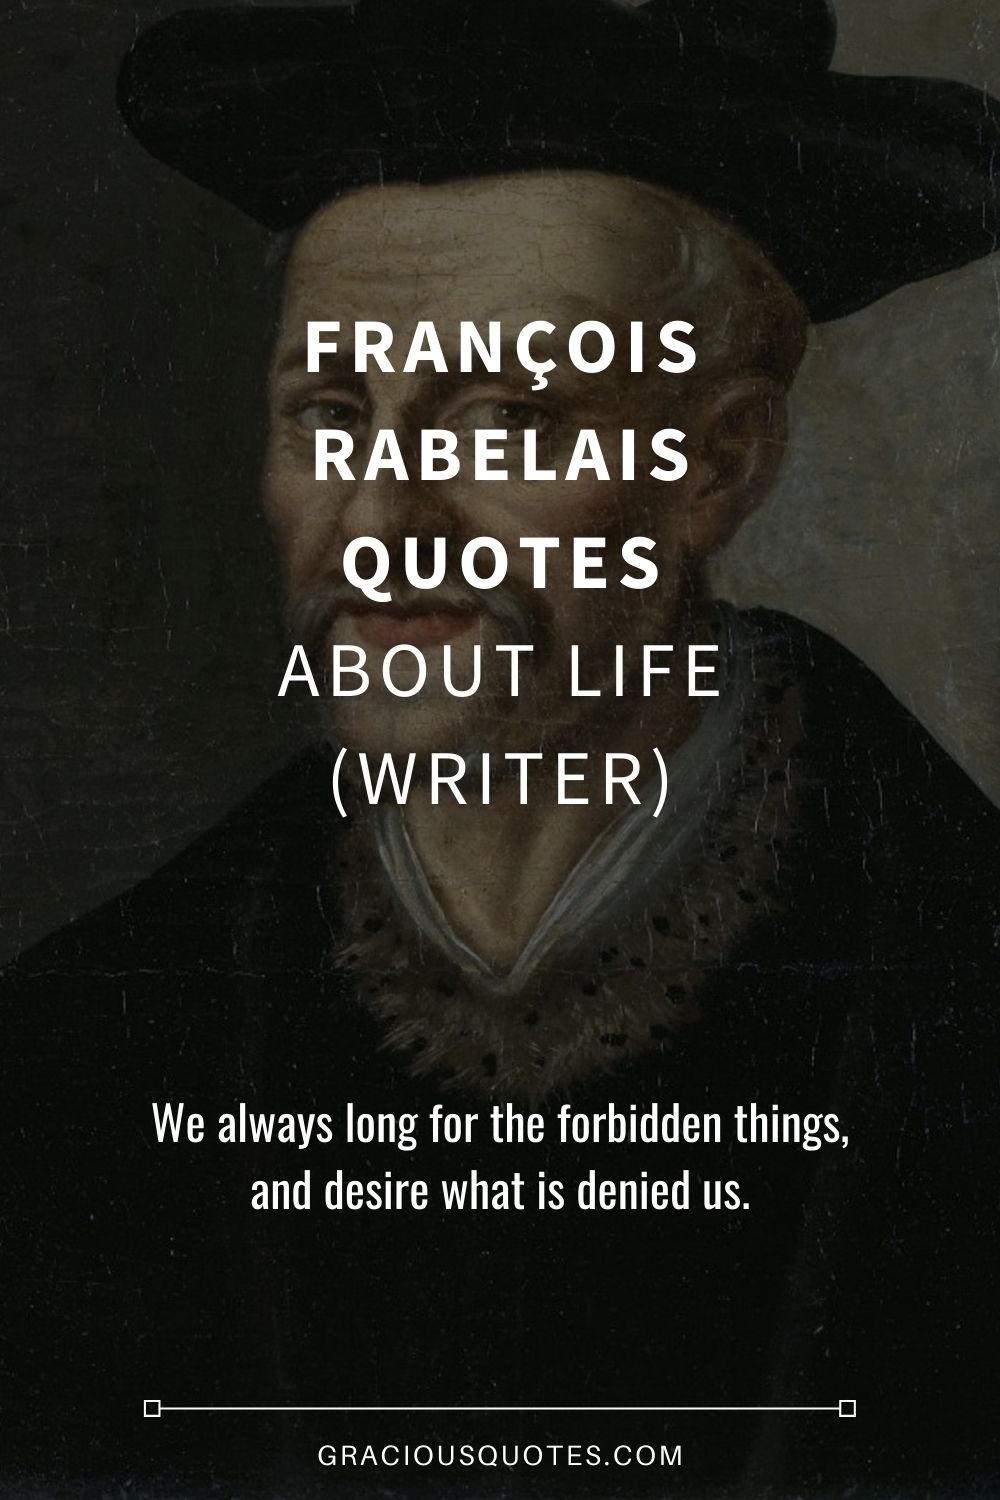 François Rabelais Quotes About Life (WRITER) - Gracious Quotes